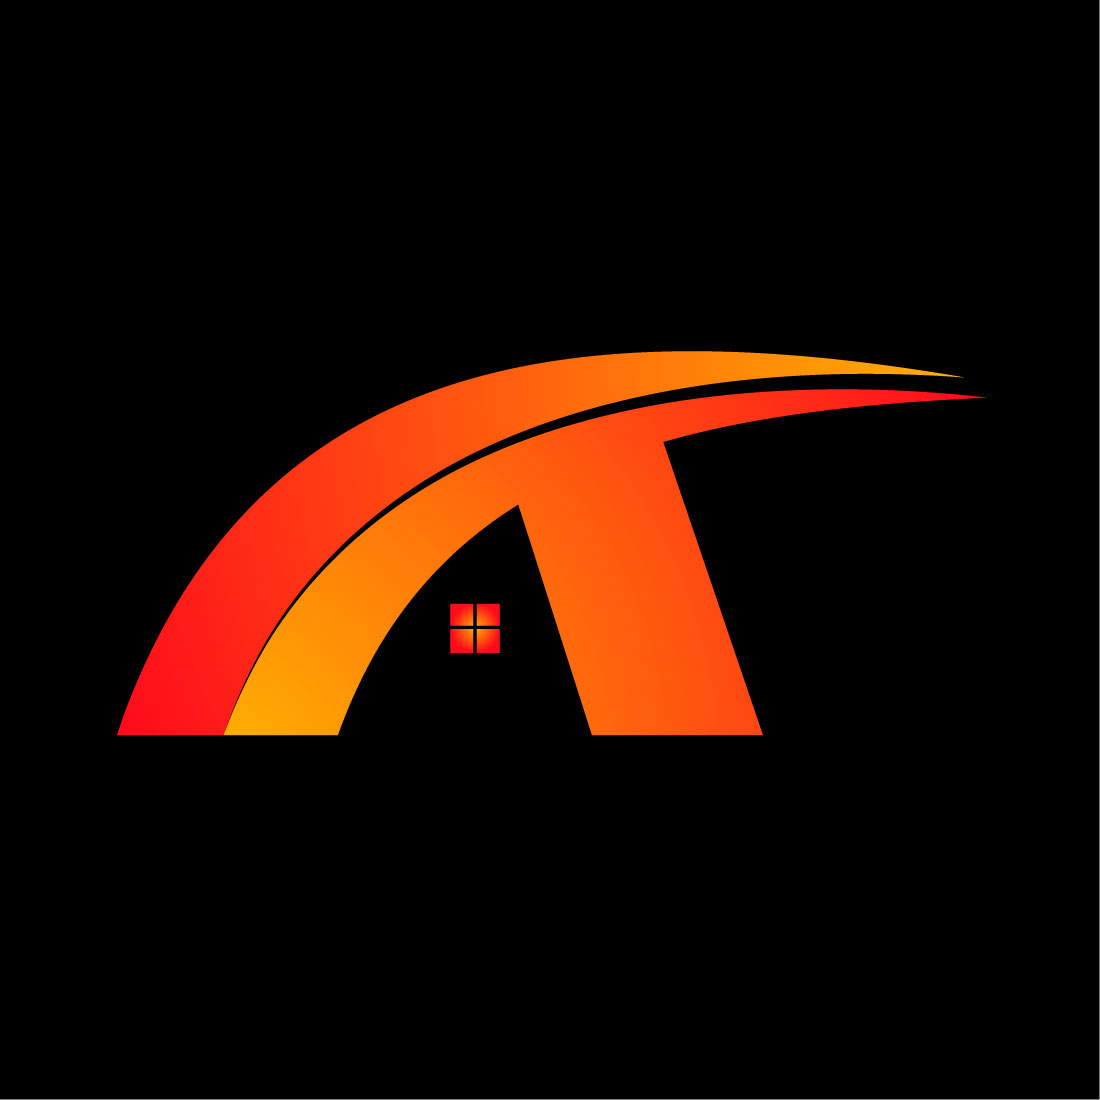 Orange preview for A Grow Letter Logo Bundle.